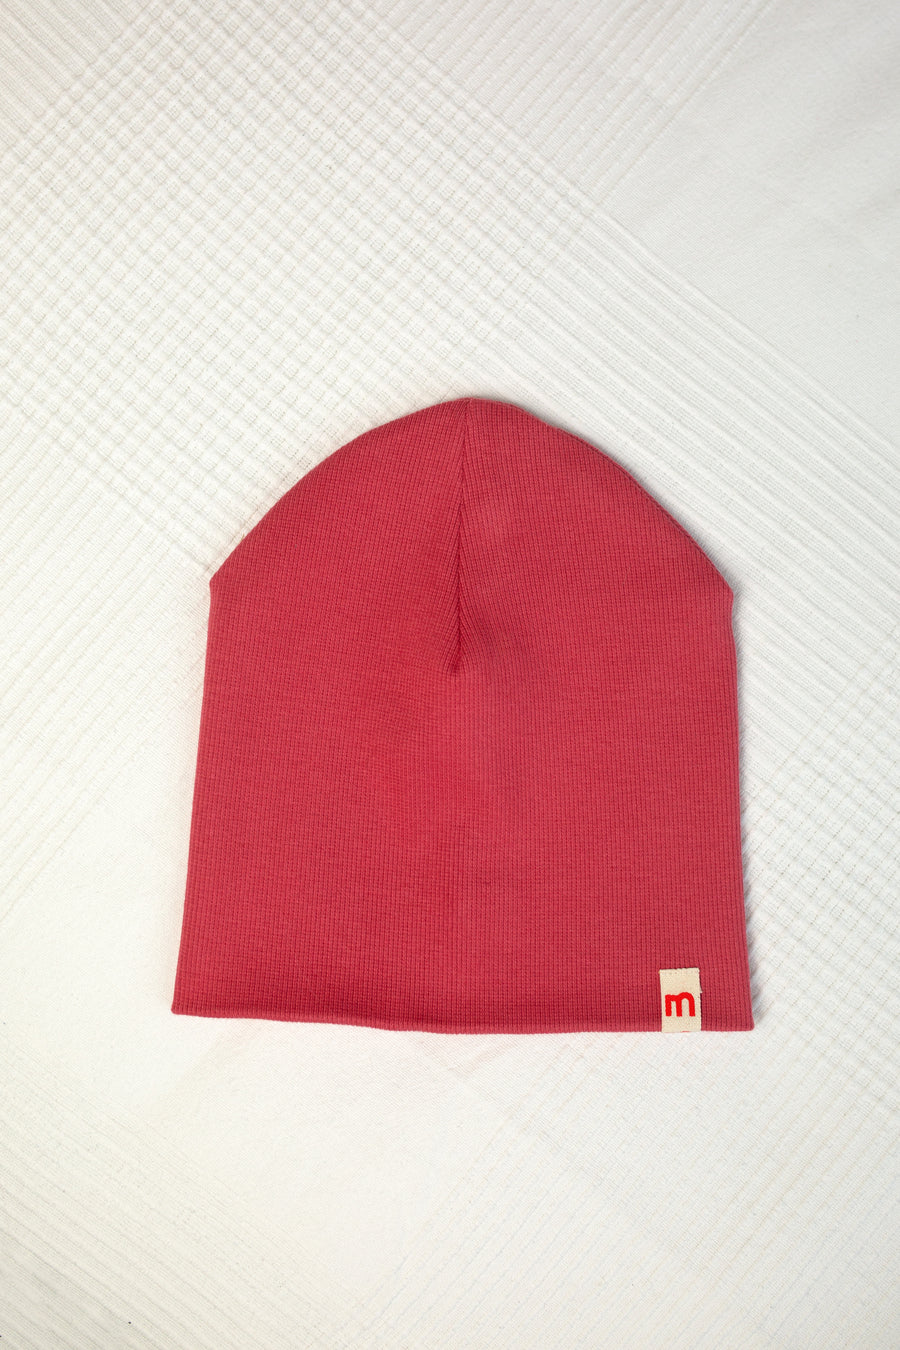 Double rib cotton hat Raspberry pink